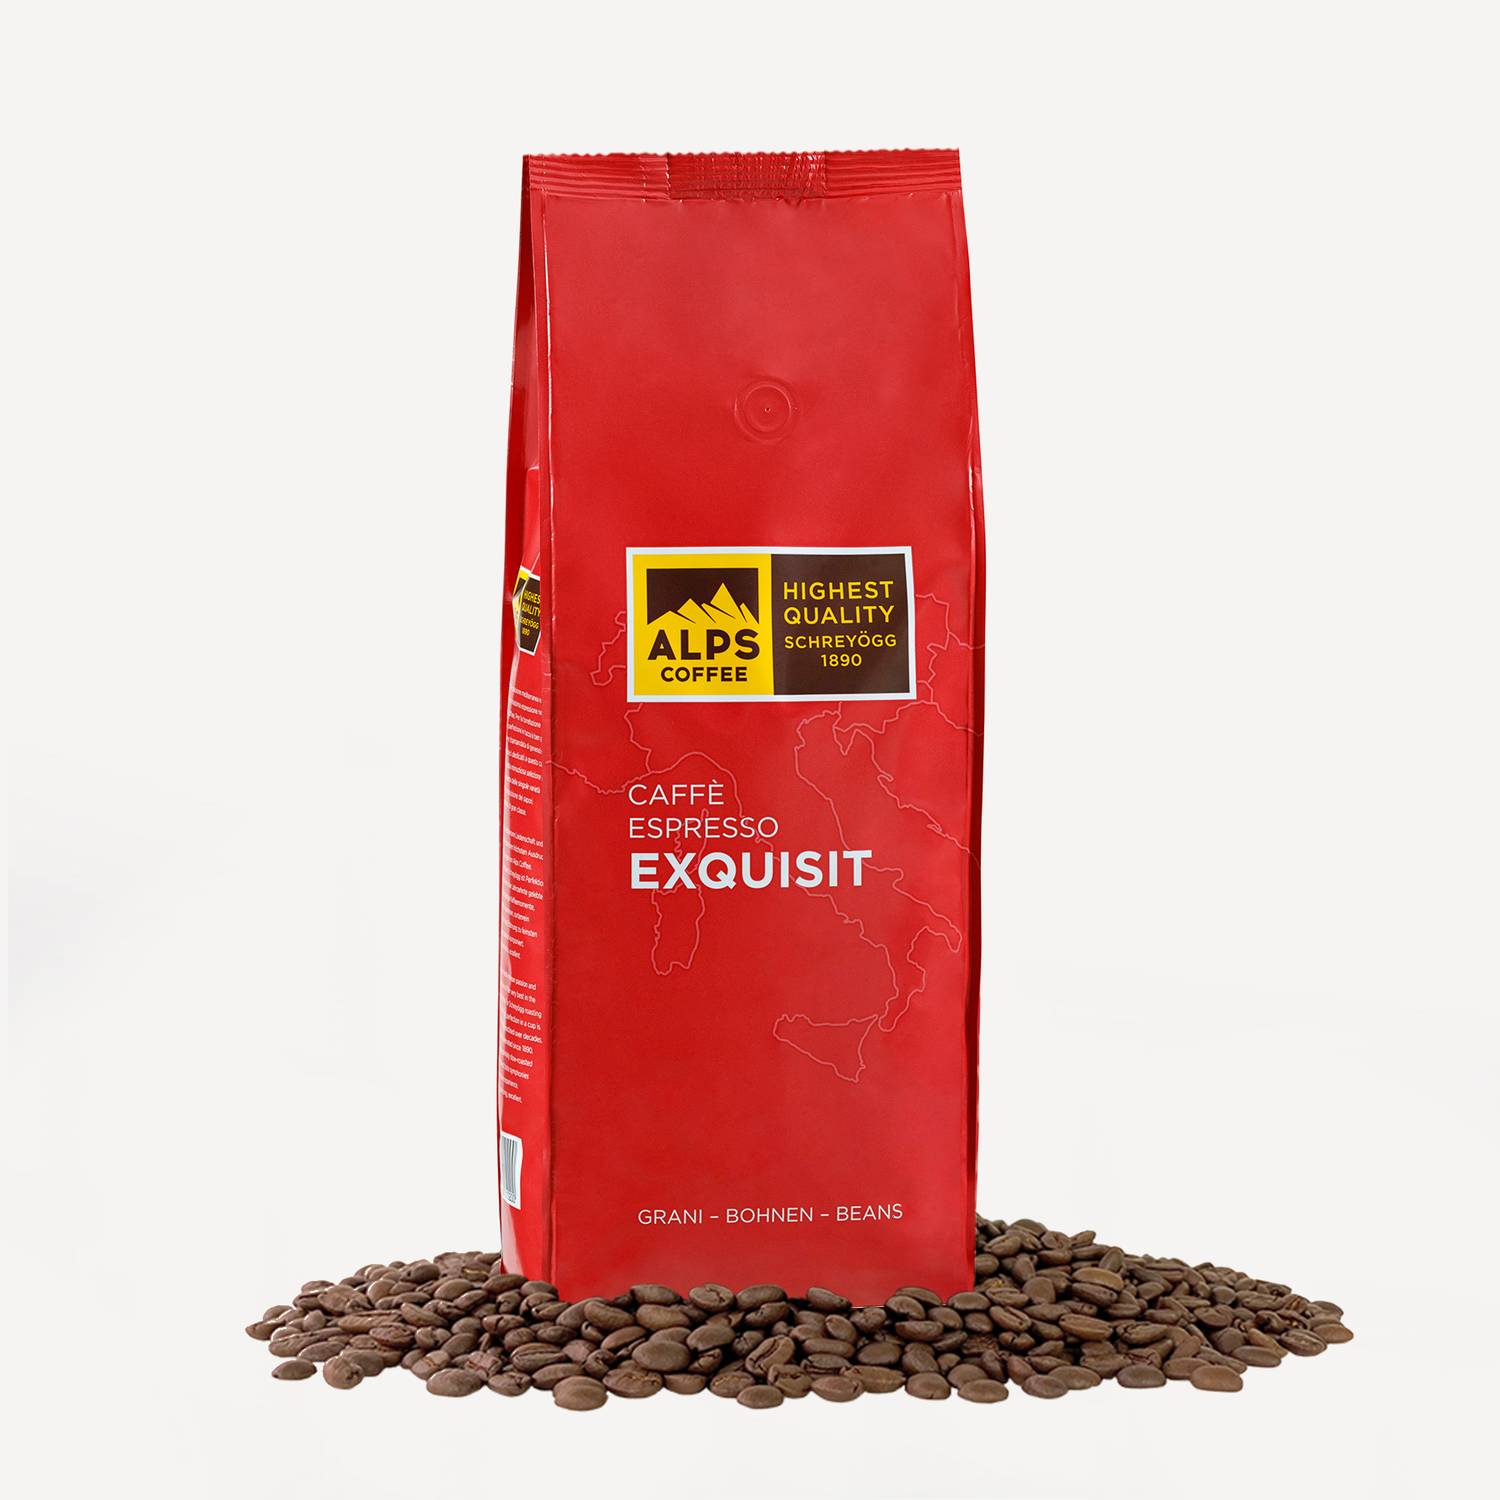 Alps Coffee Exquisit Caffè Espresso 1kg